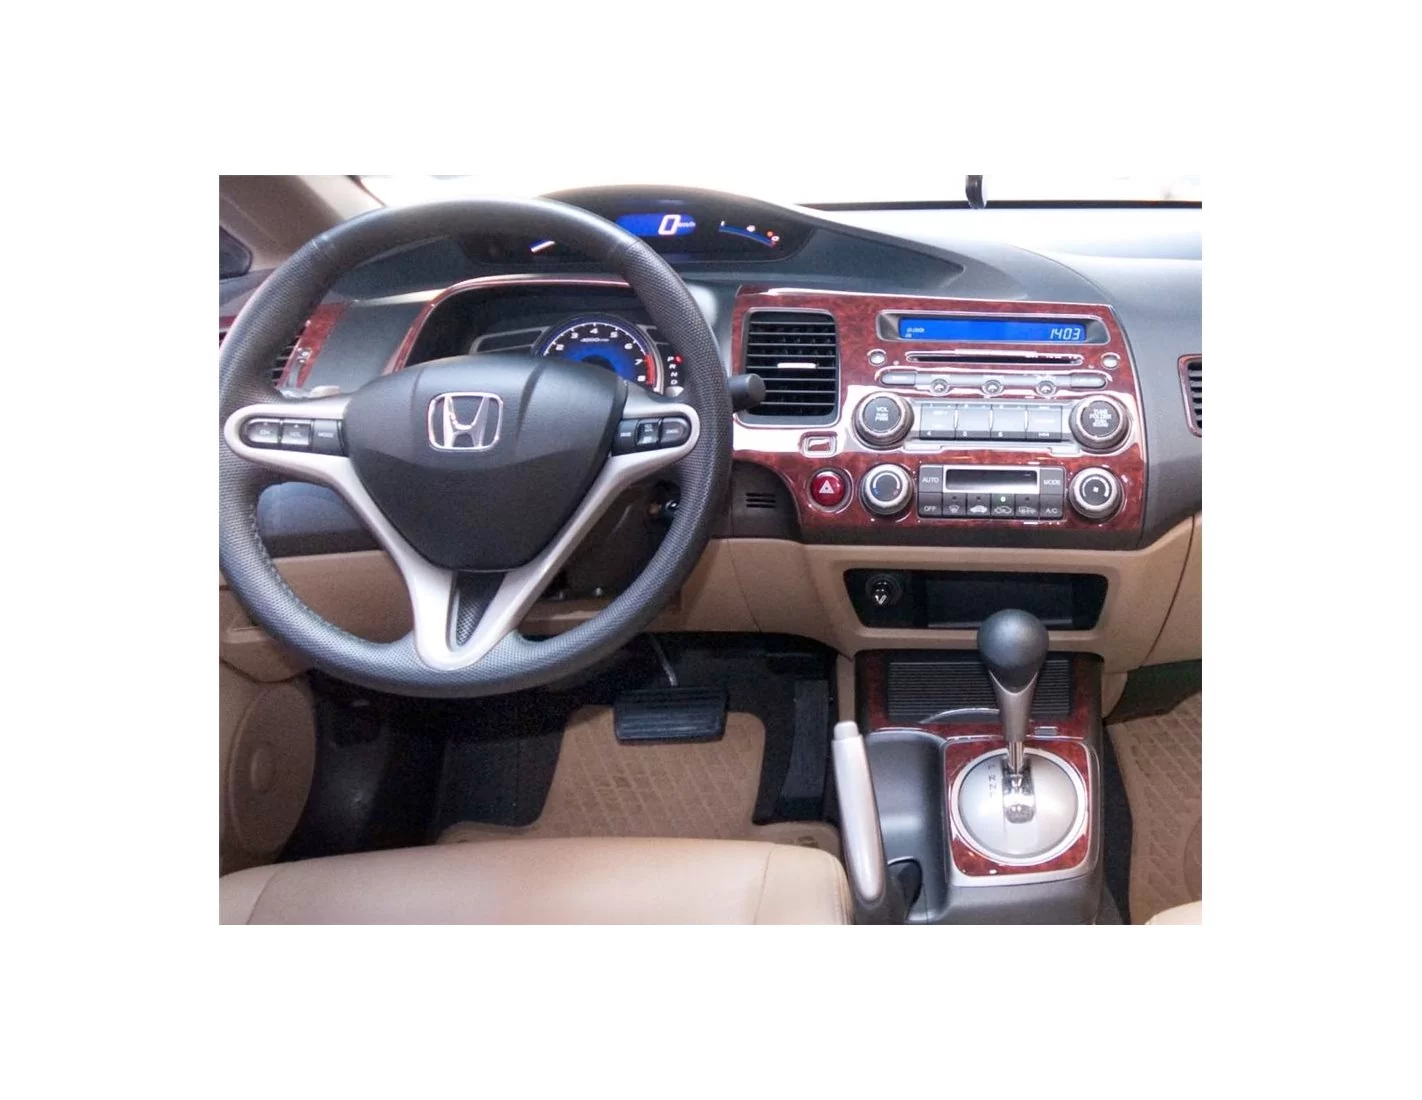 Honda Civic 2002-2002 Manual Gearbox. 2 or 4 Doors. with glowe-box. 35  Teilige Satz BD innenausstattung armaturendekor cockpit d